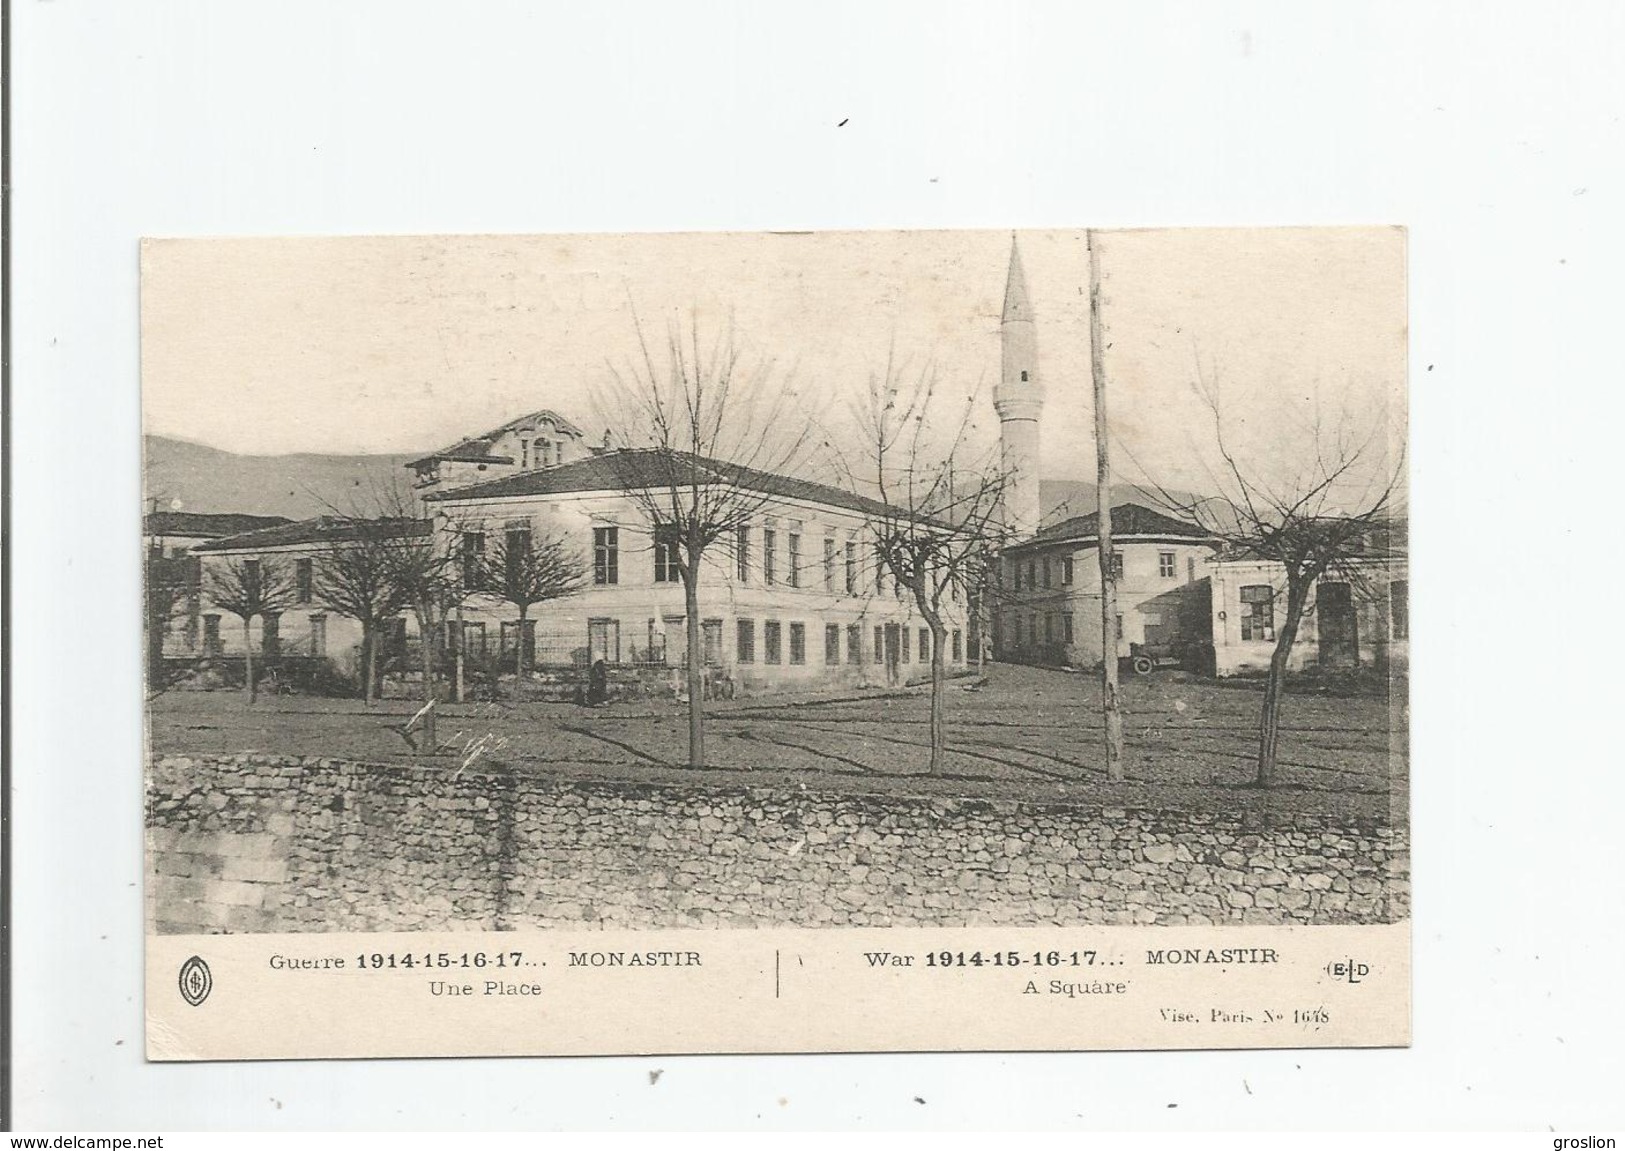 MONASTIR (BITOLA MACEDOINE) GUERRE 1914 15 16 17 UNE PLACE - Macédoine Du Nord